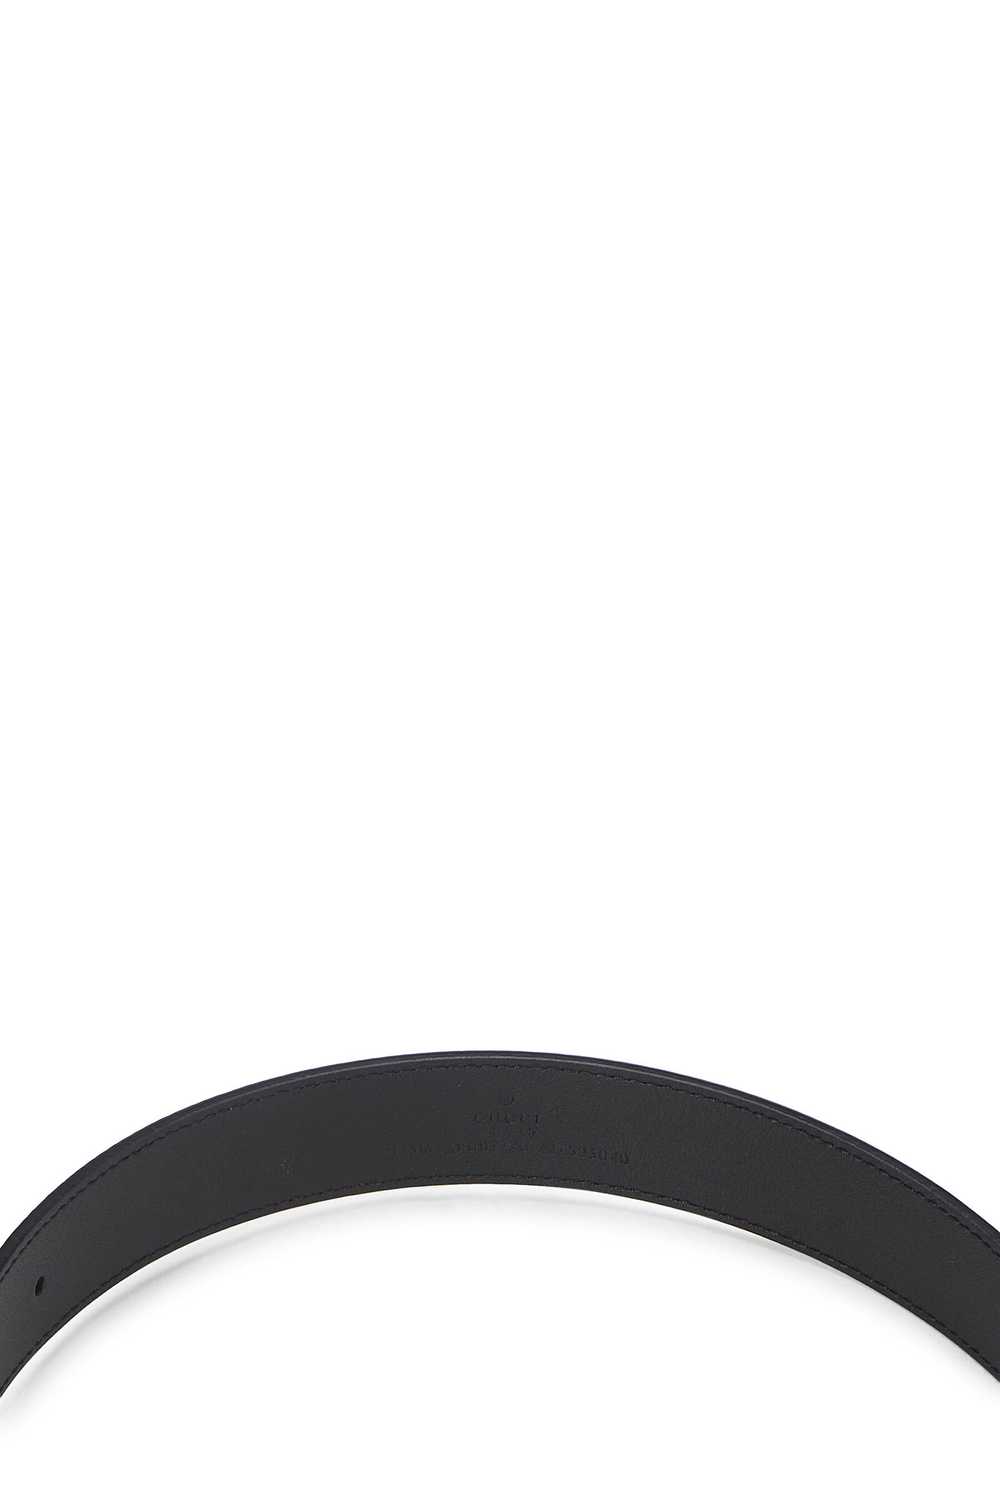 Black Leather GG Marmont Belt - image 4